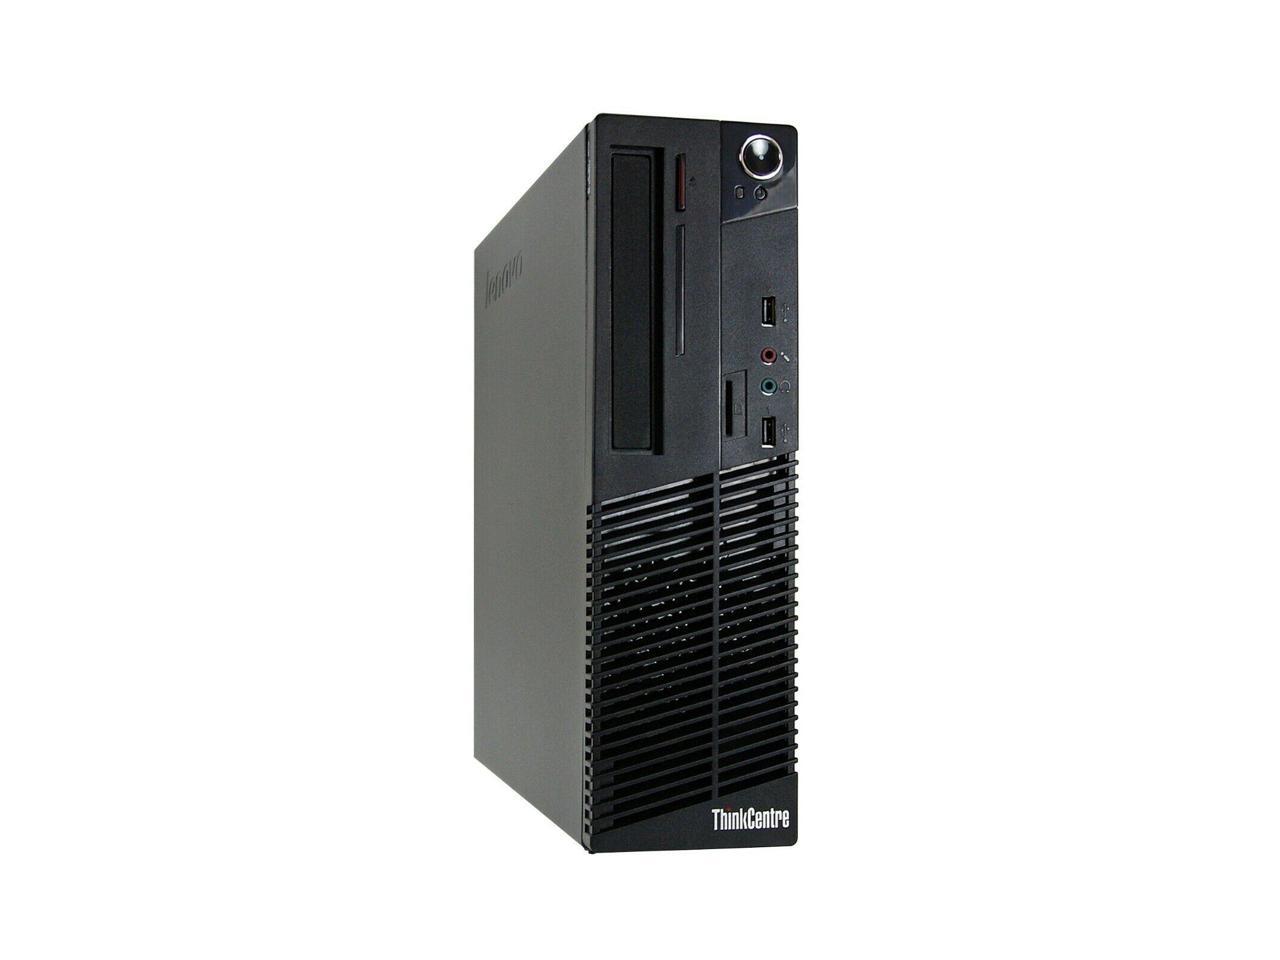 Lenovo M79 SFF Desktop Computer PC - 3.5Ghz Quad Core, 8GB RAM, 128GB SSD, Windows 10 Professional